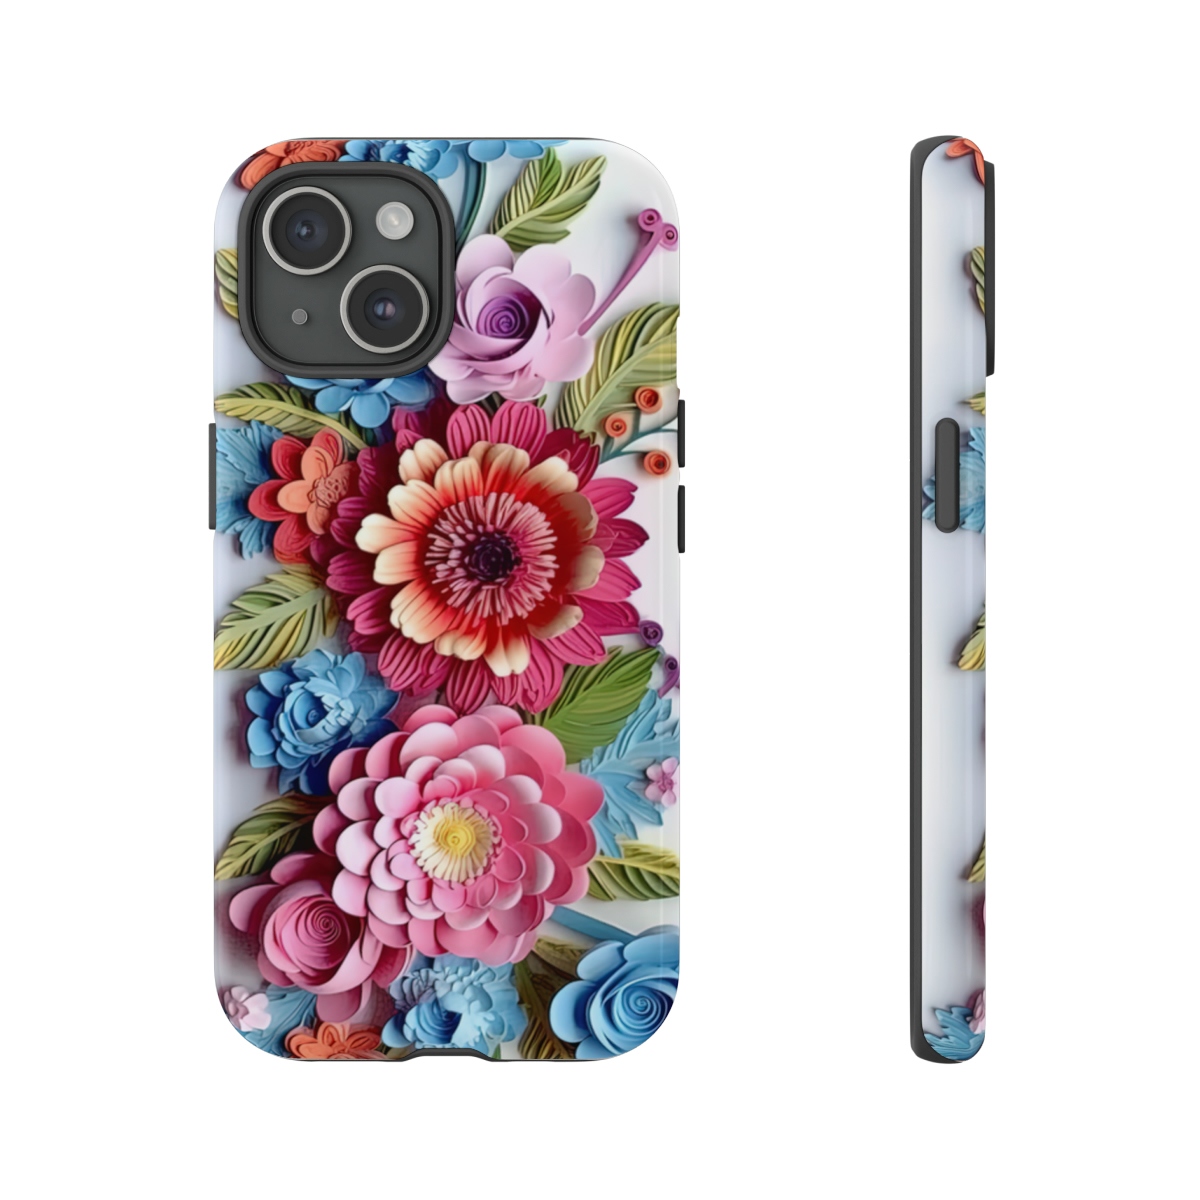 "Floral" Cover Case Designs